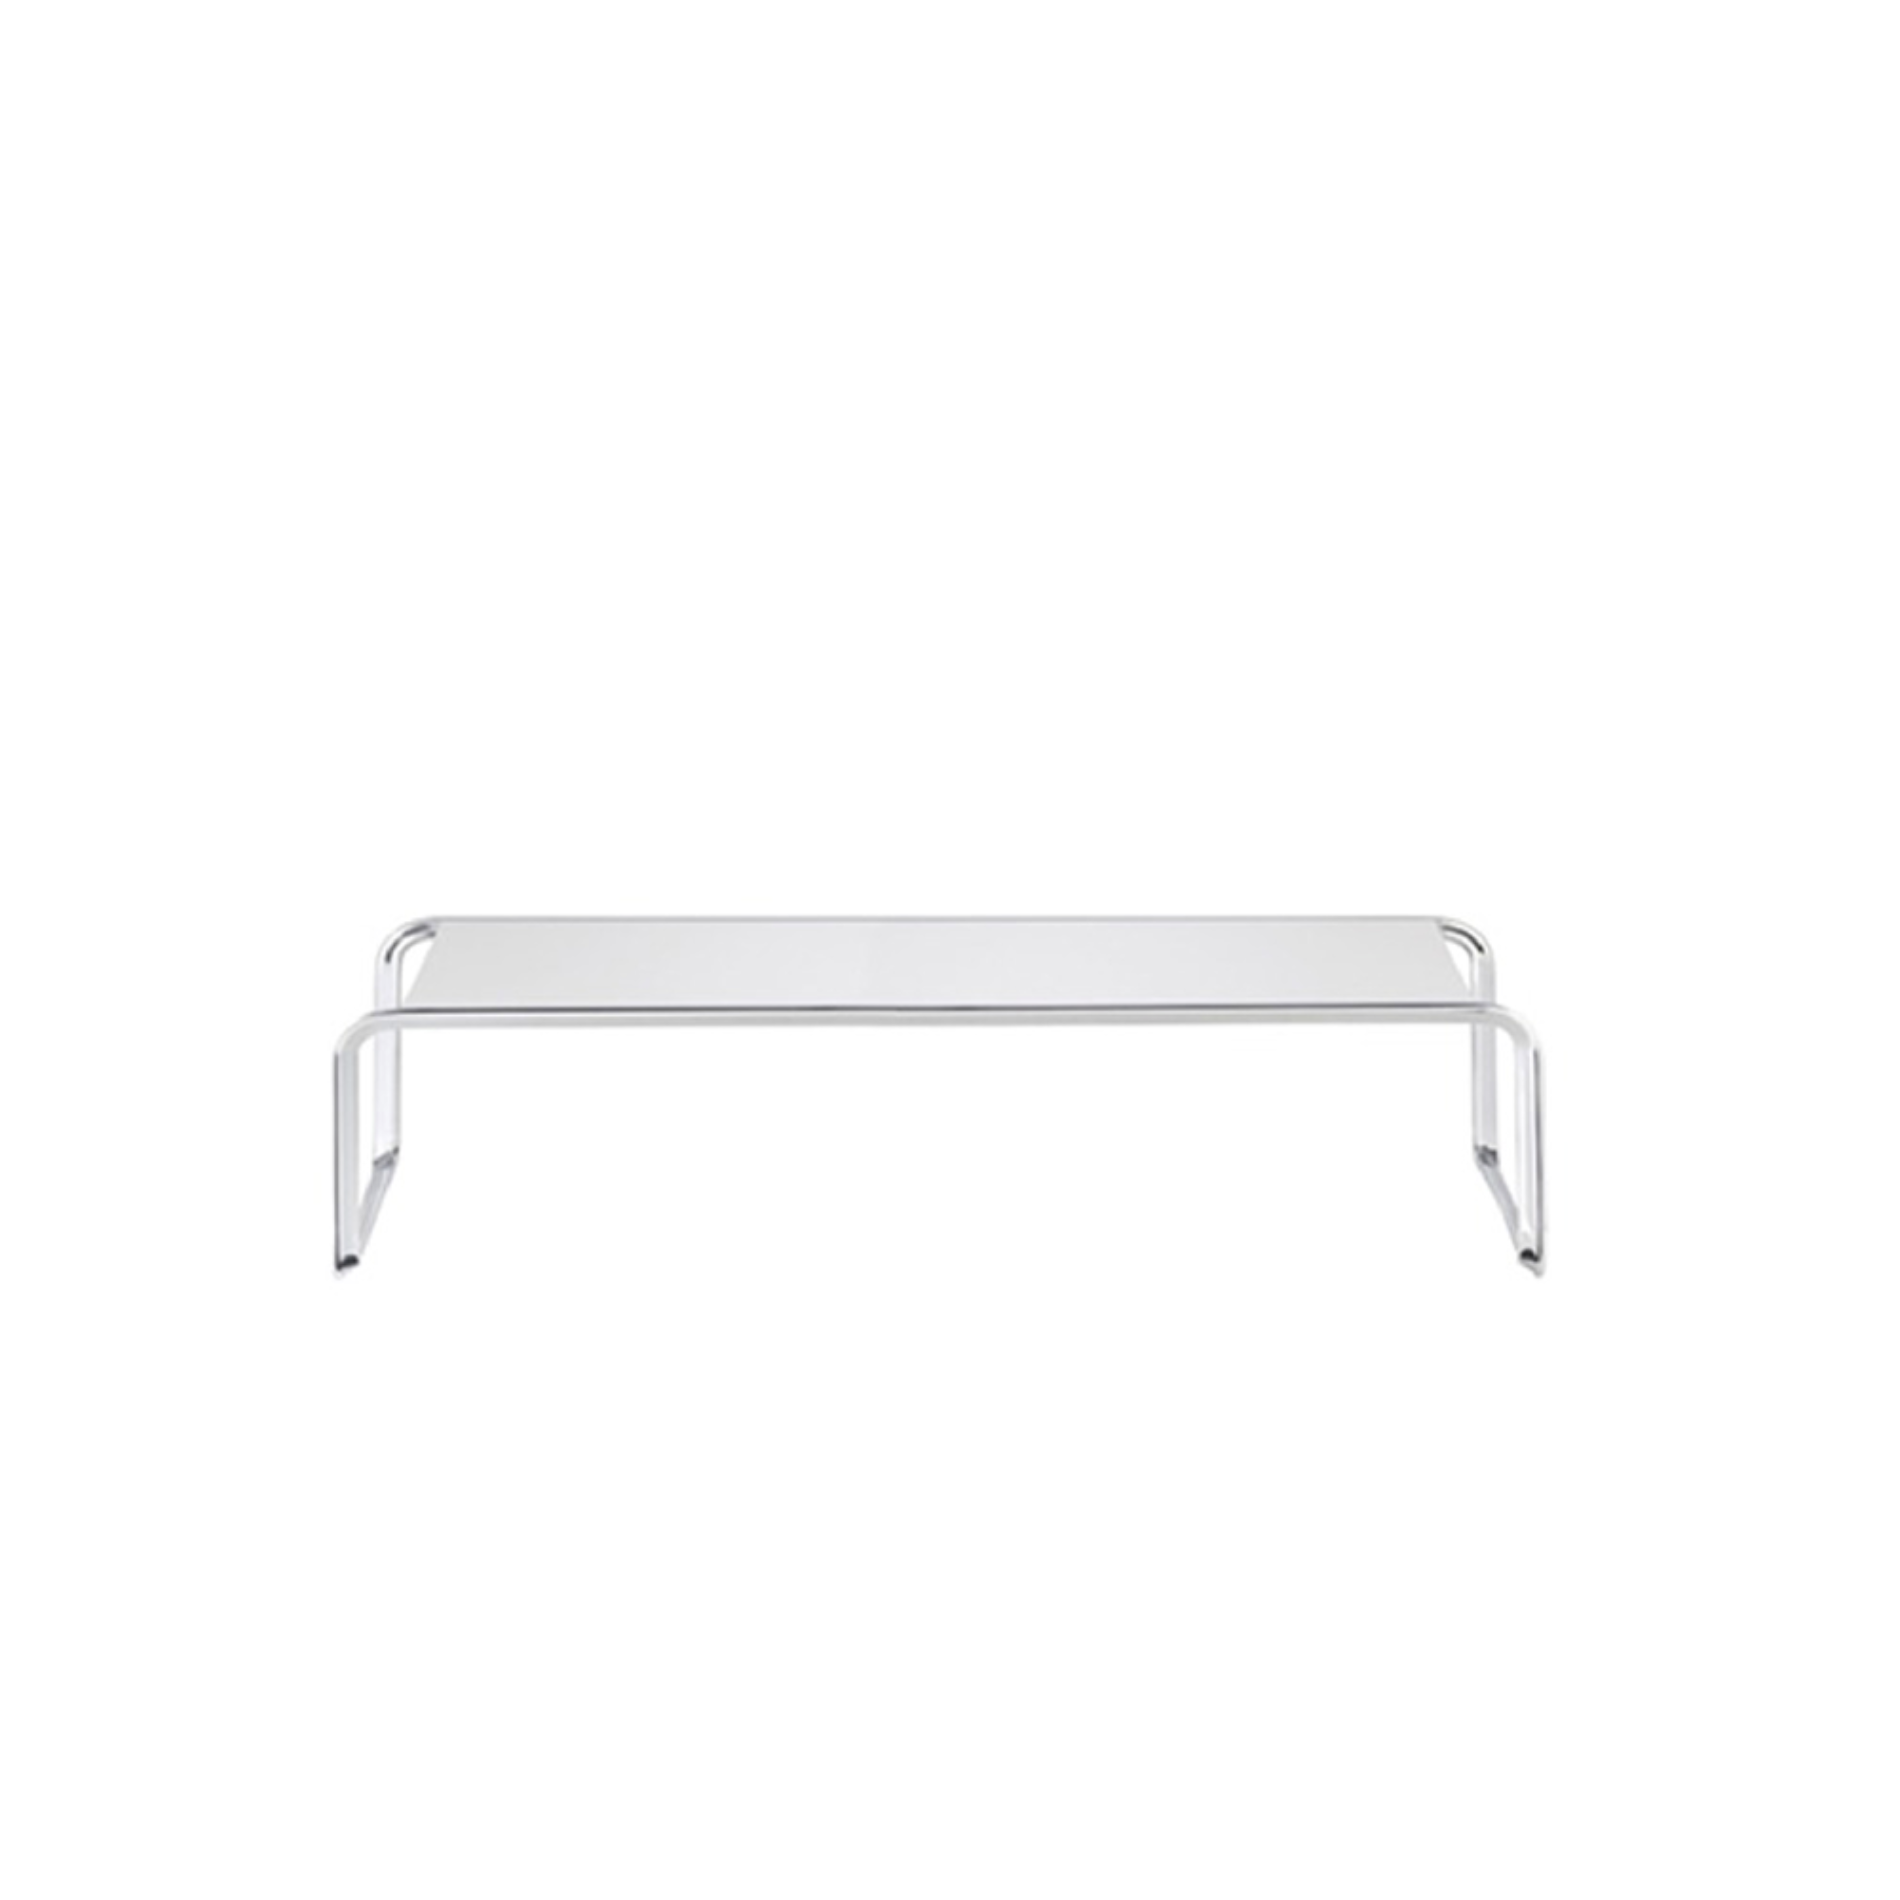 TECTA K1C Oblique Couch Table - White 125Cm